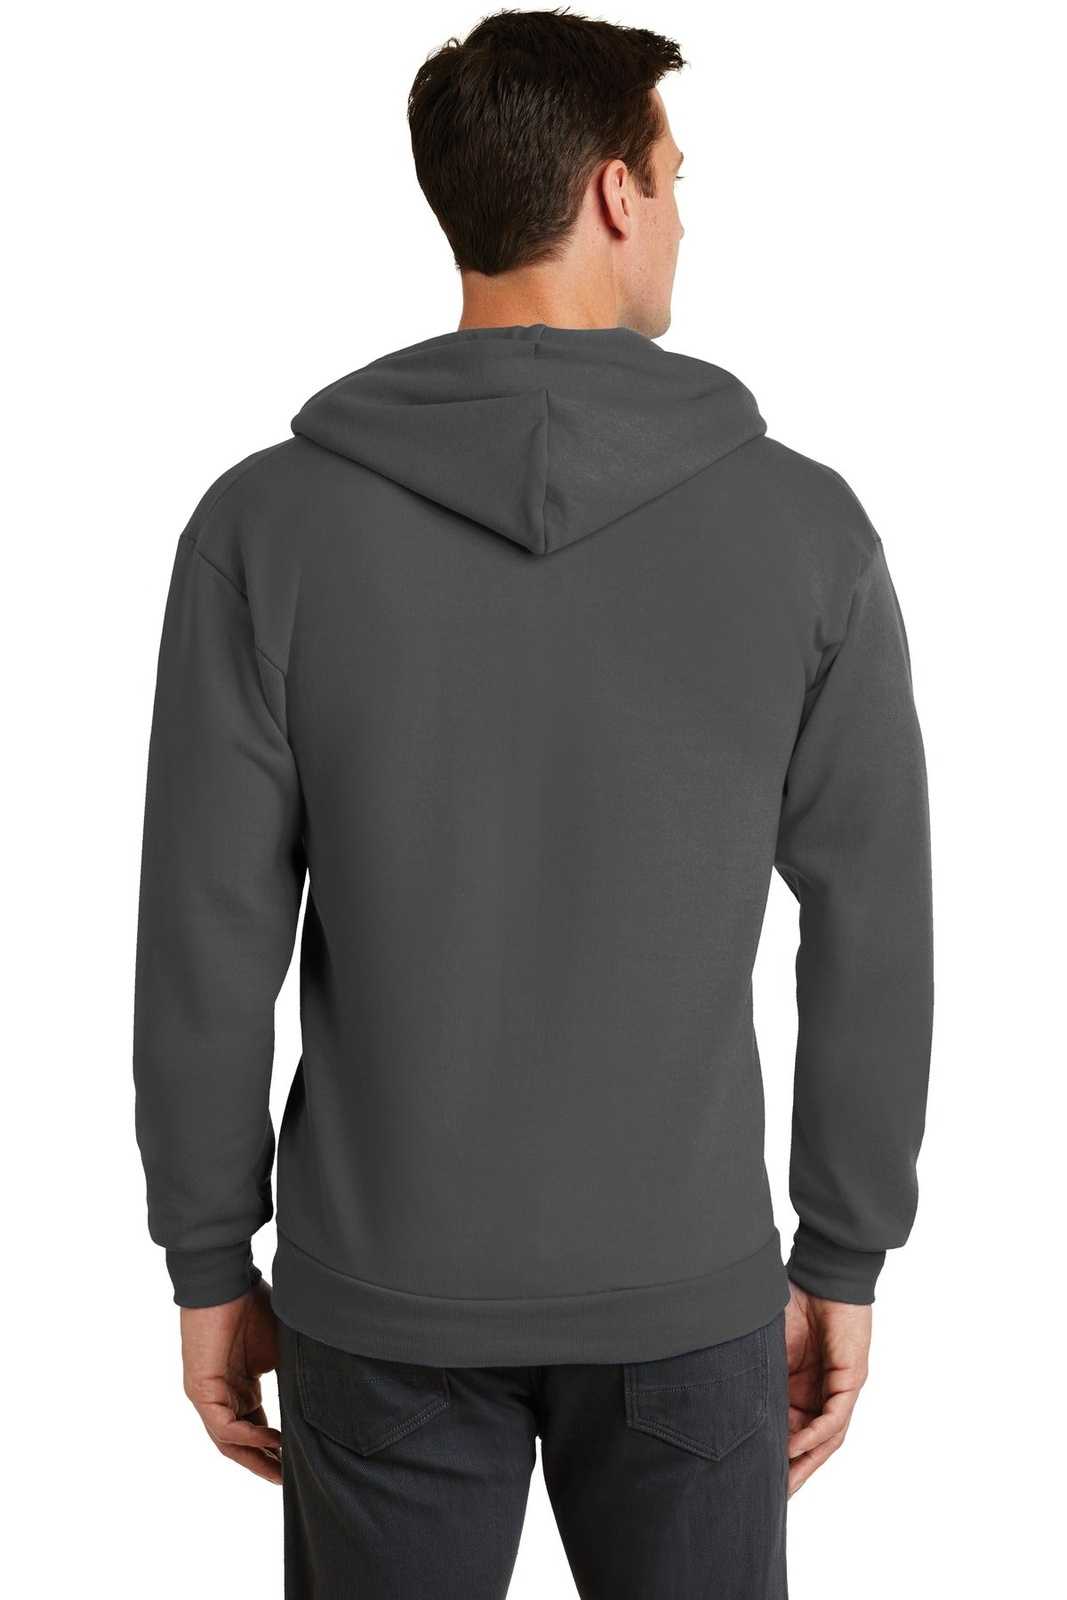 Port & Company PC78ZH Core Fleece Full-Zip Hooded Sweatshirt - Charcoal - HIT a Double - 1